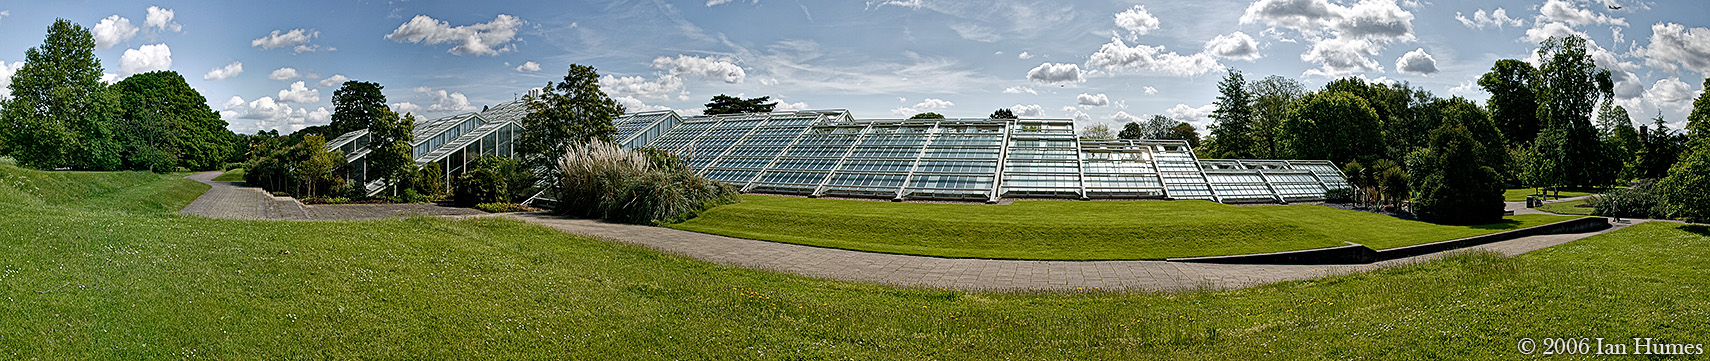 Princess of Wales Conservatory - Kew Gardens